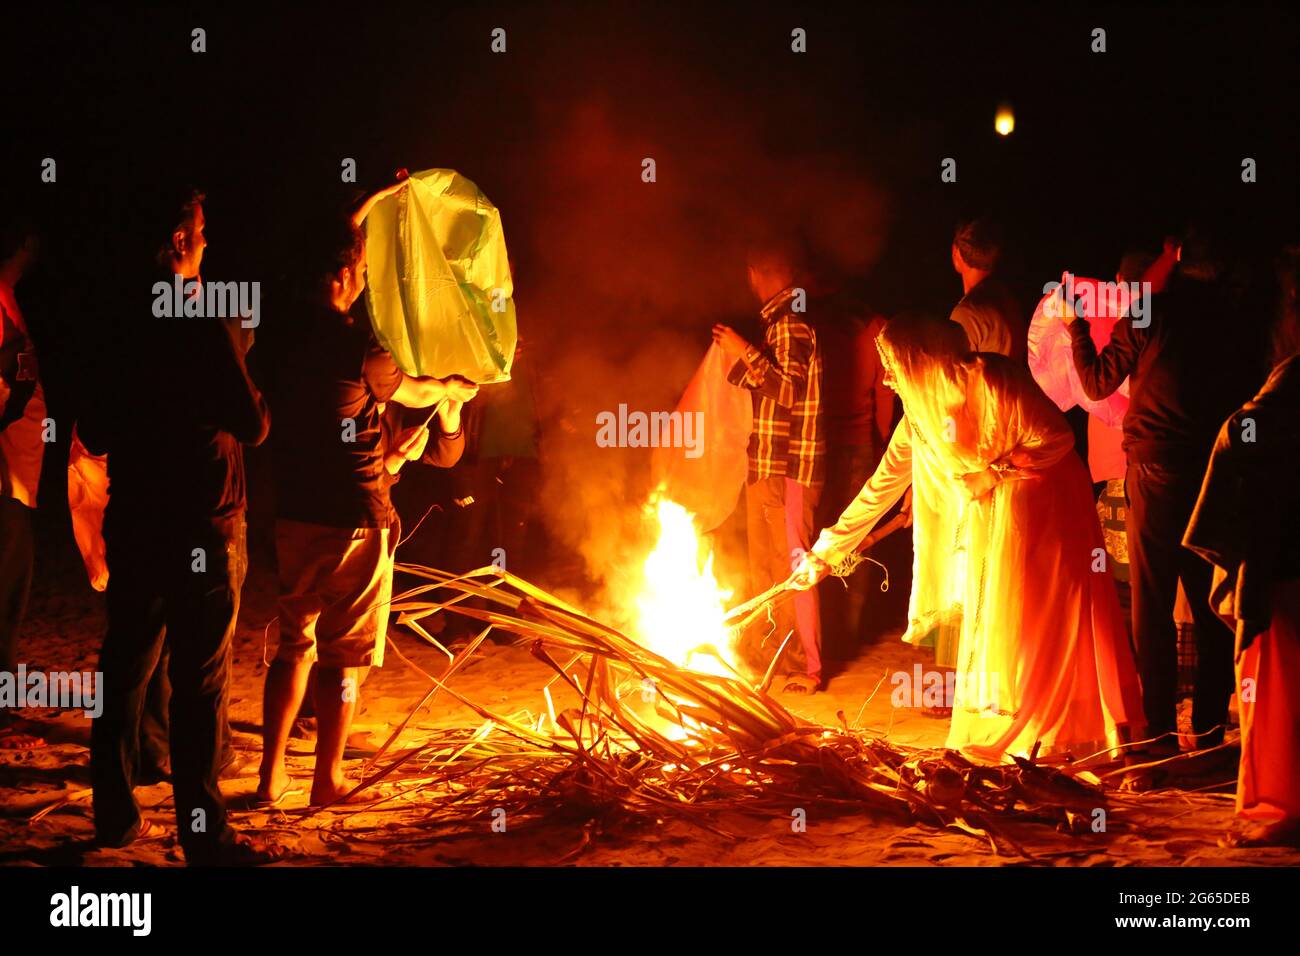 People try to light paper lanterns at the Proberona full moon festival at keang mor, Bandarban, Bangladesh. Stock Photo